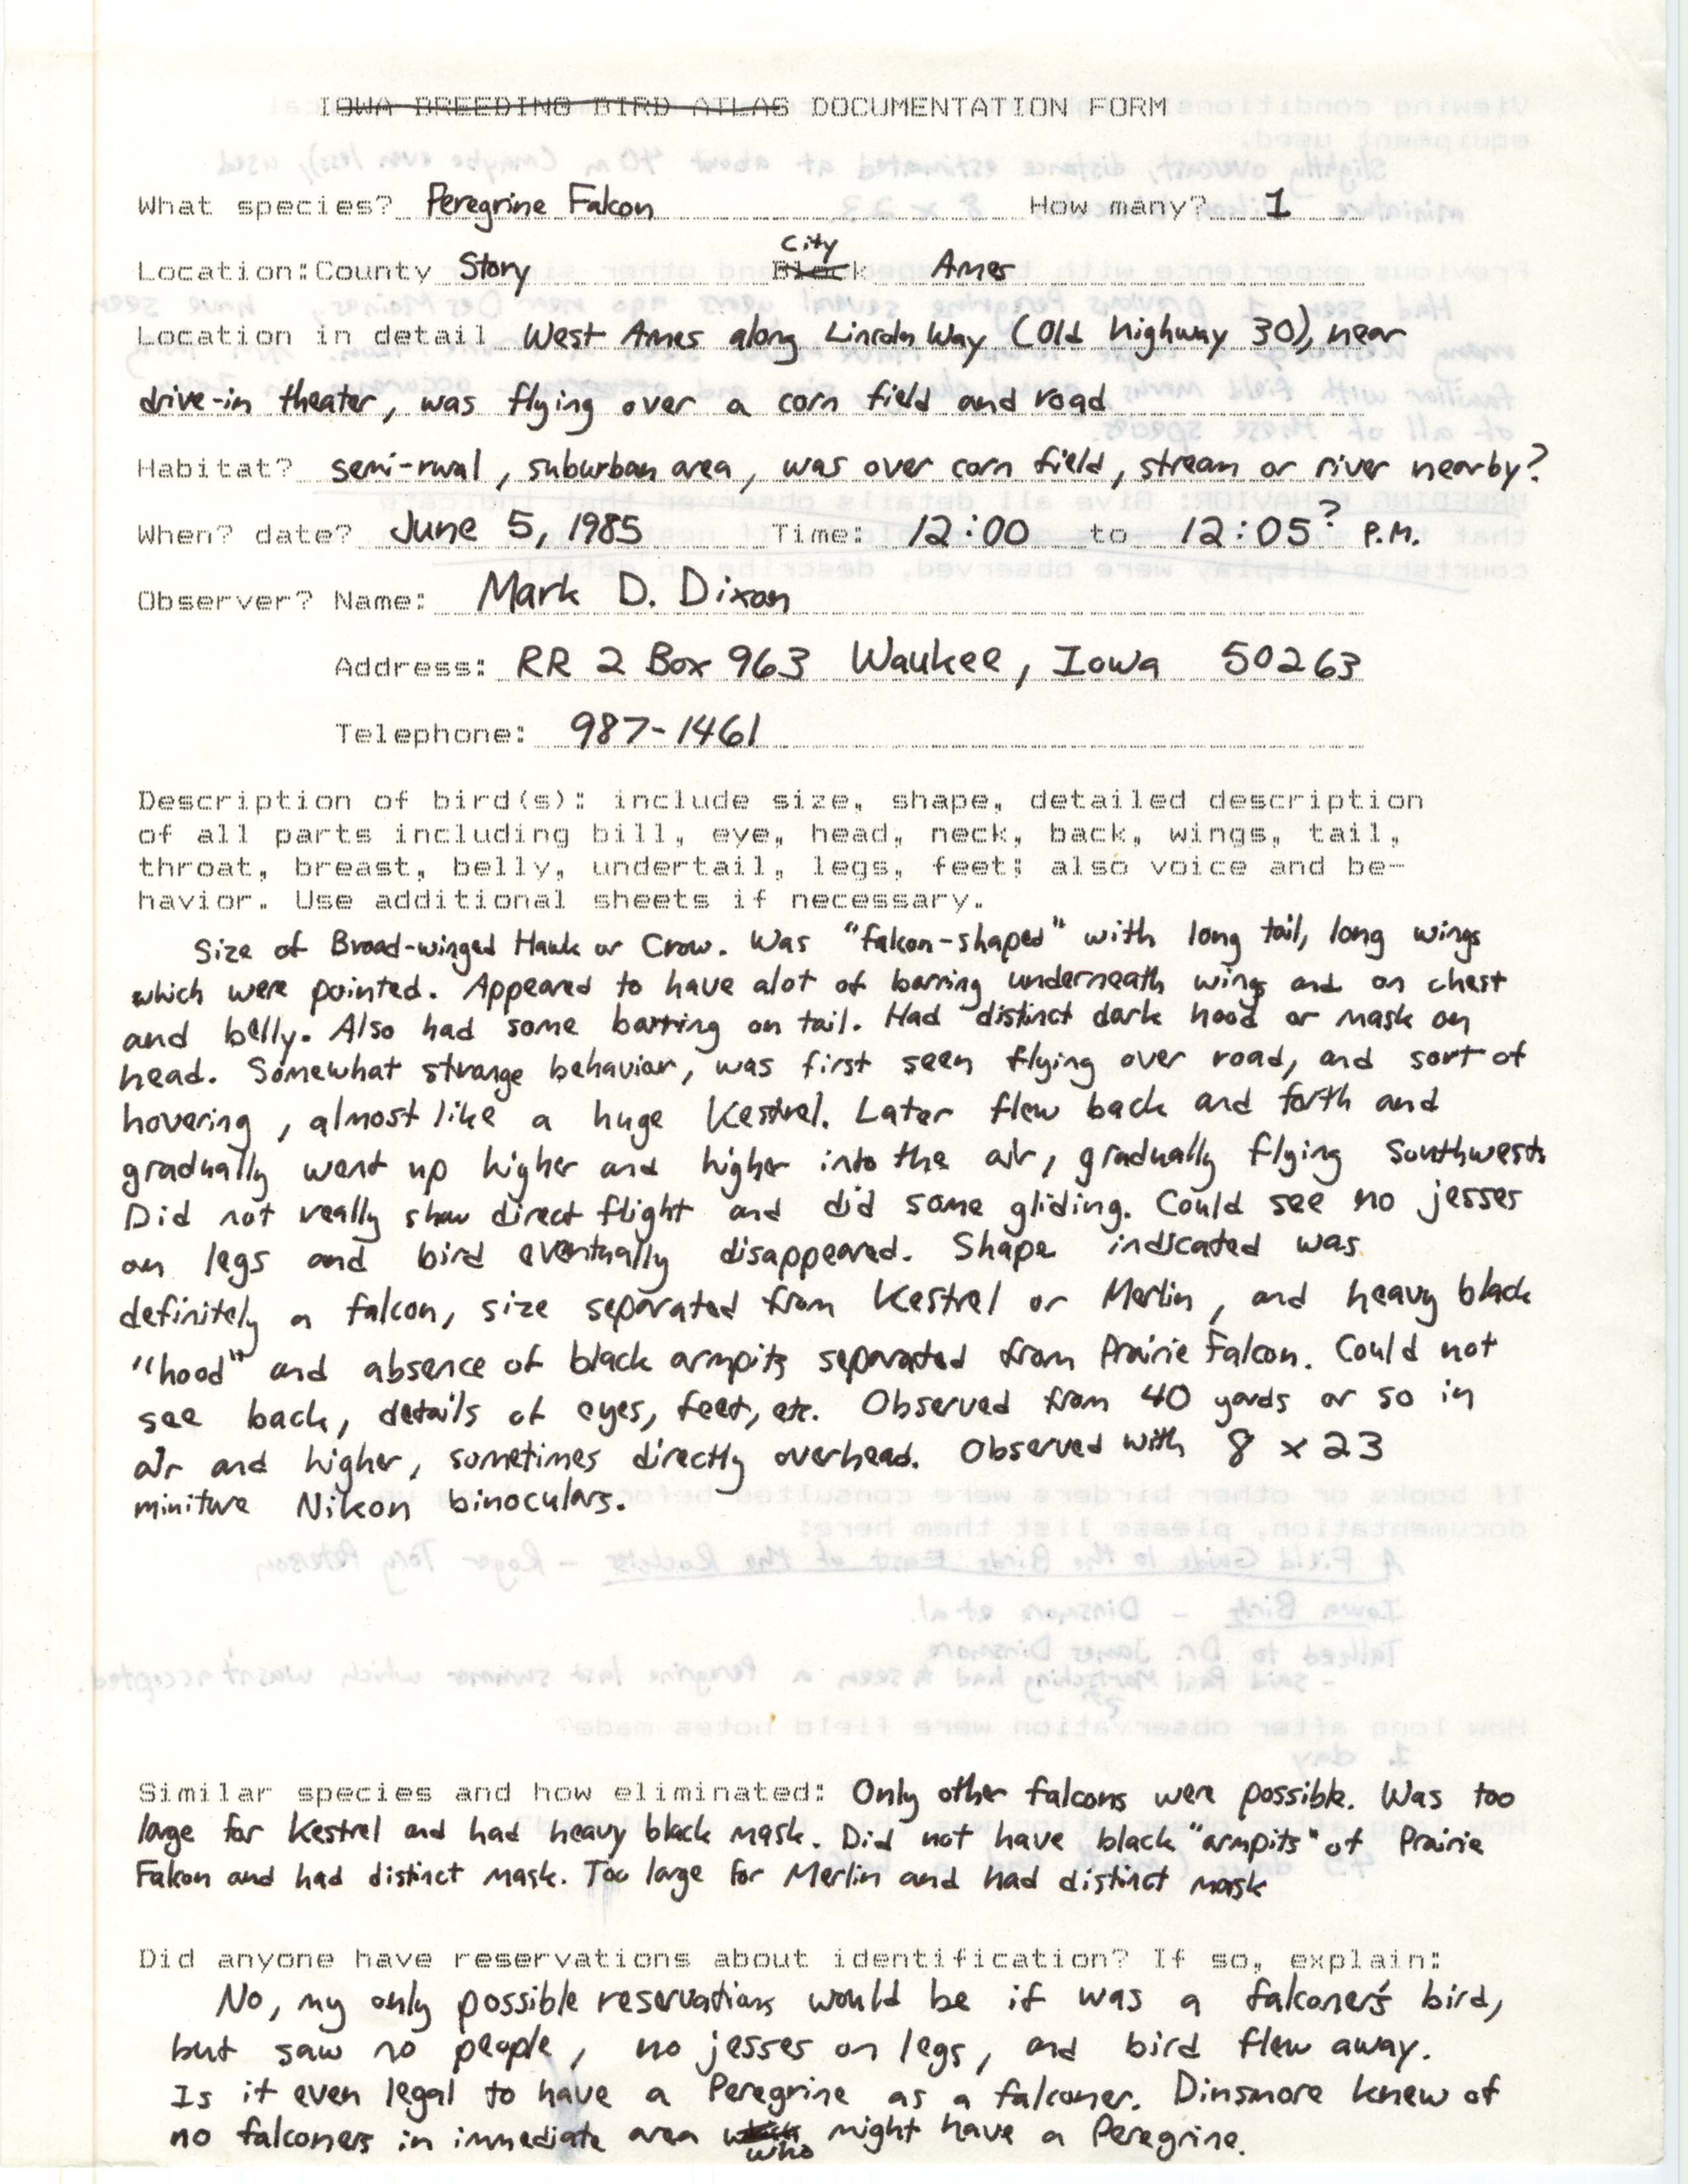 Rare bird documentation form for Peregrine Falcon at Ames, 1985